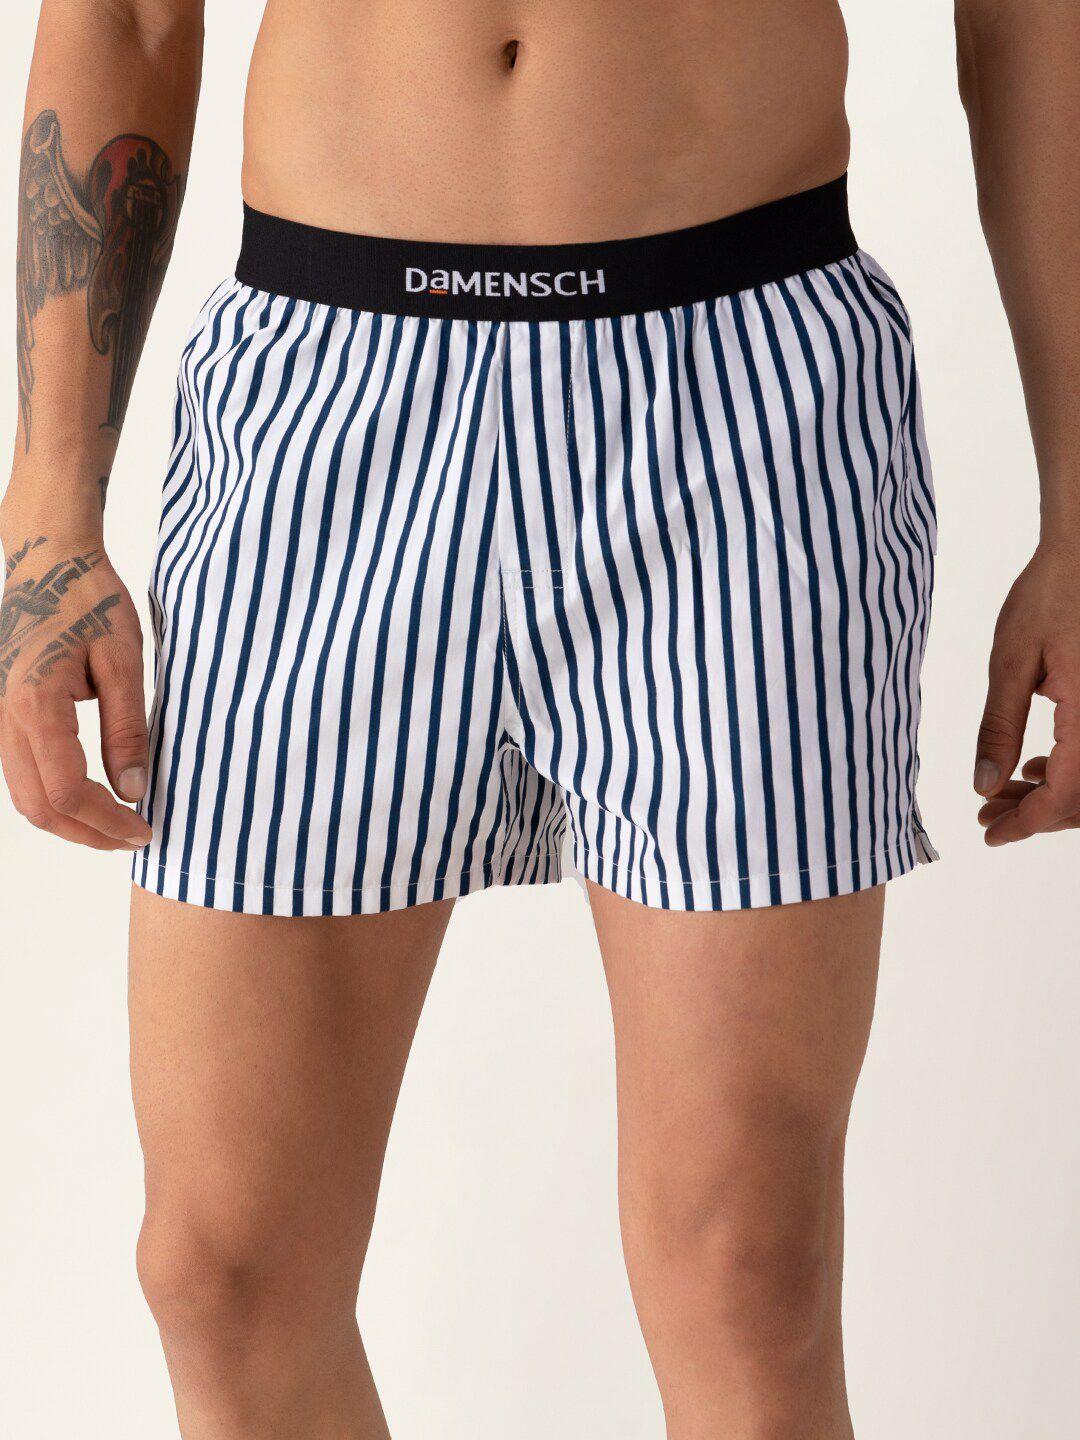 damensch  men striped white ultra-light cotton regular fit inner boxer